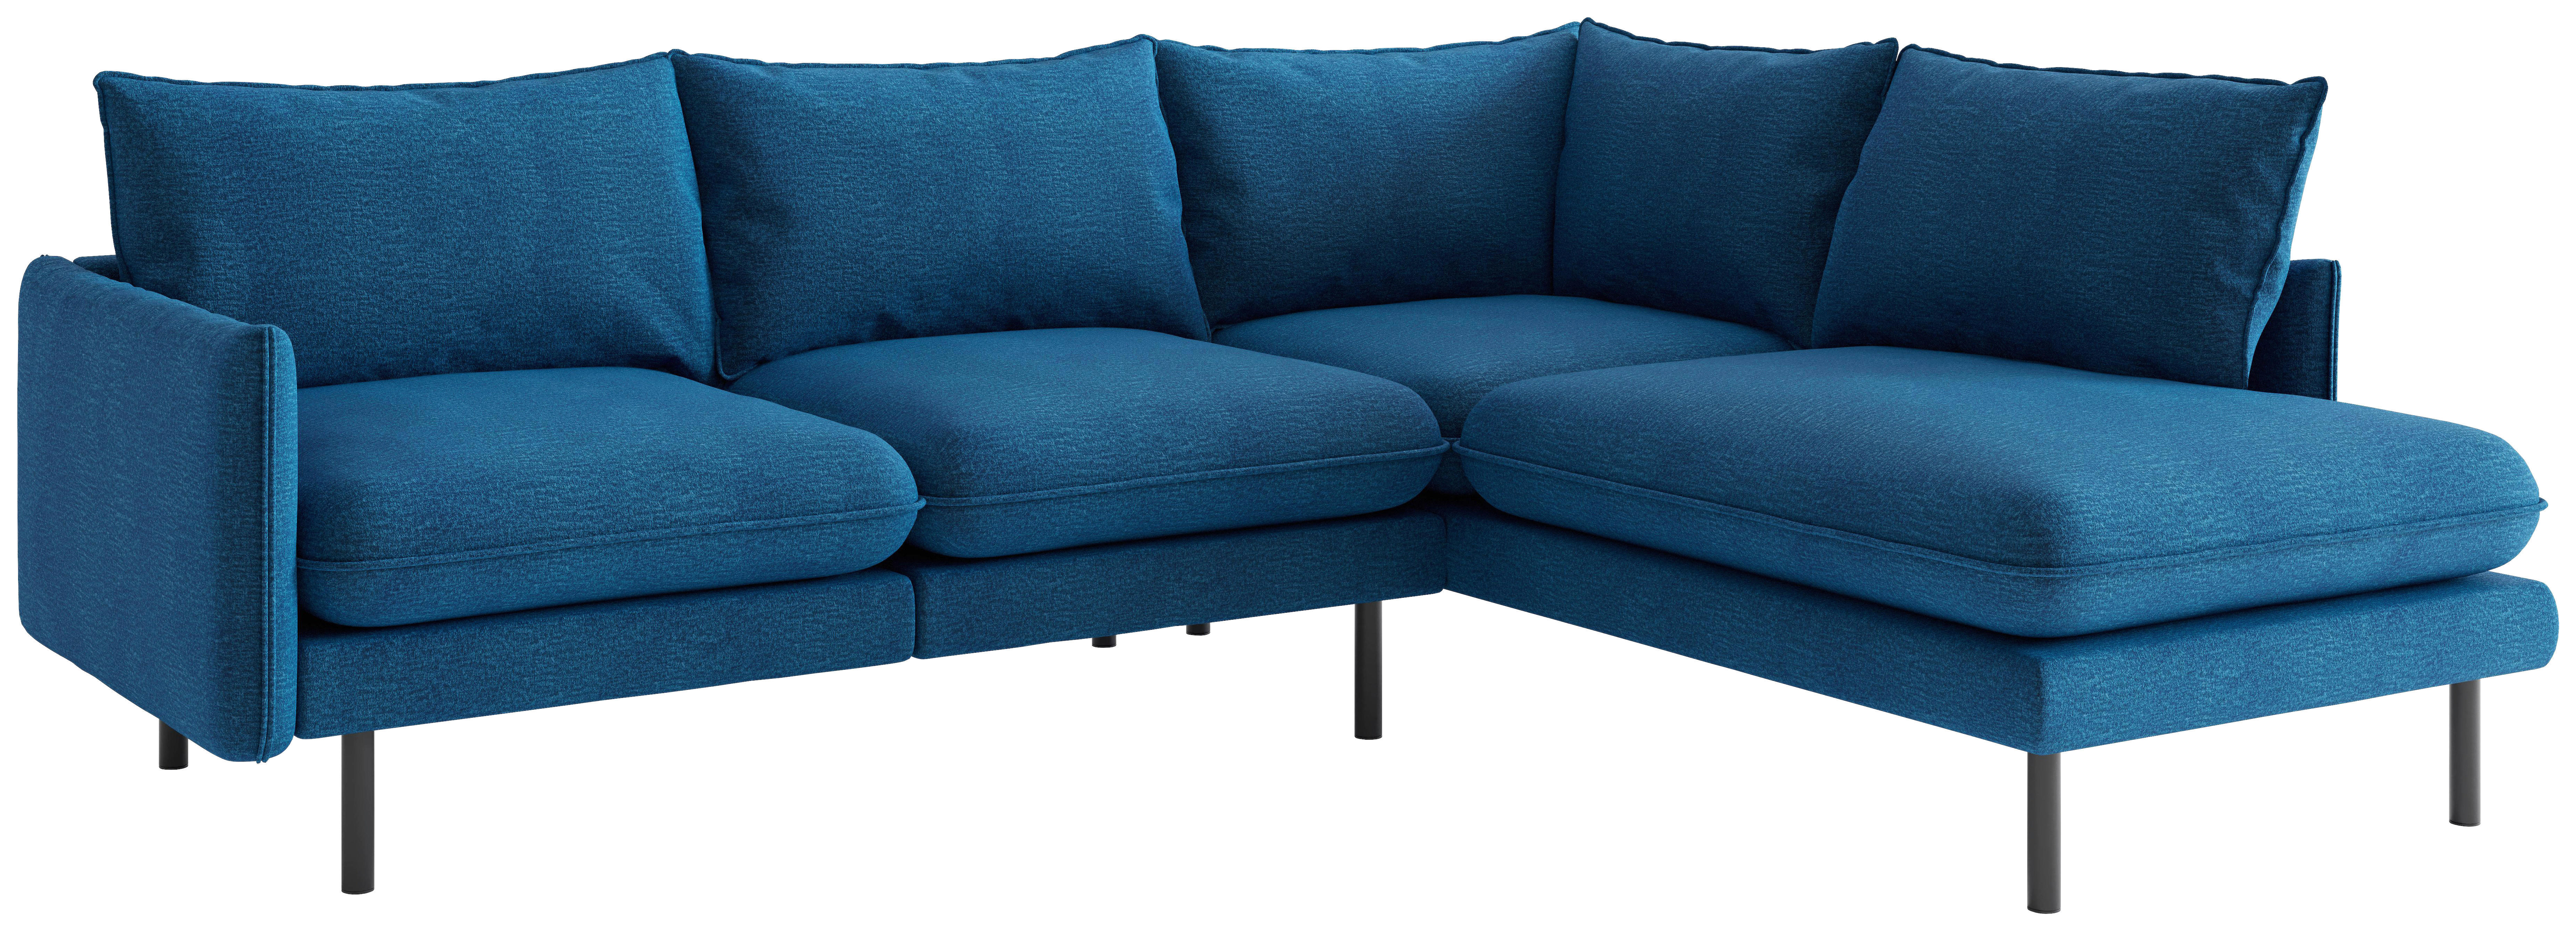 WOHNLANDSCHAFT Blau Flachgewebe  - Blau, Design, Textil (267/204cm) - Livetastic